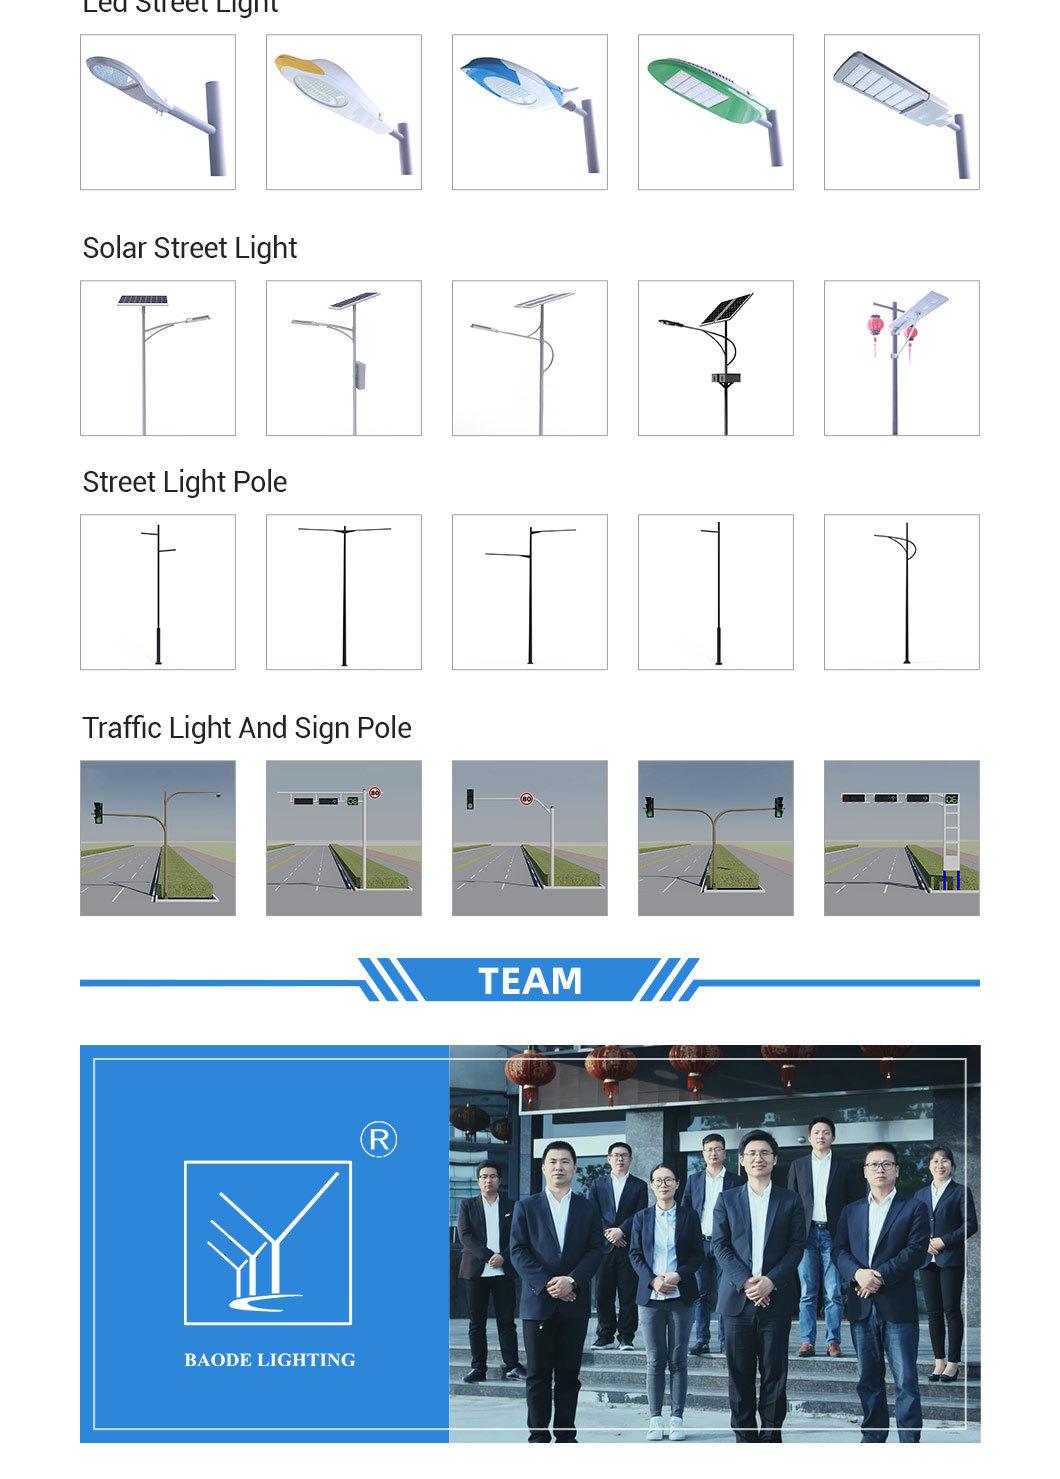 Yijie 12W New Mini Slim LED Wall Washer Lamp Light